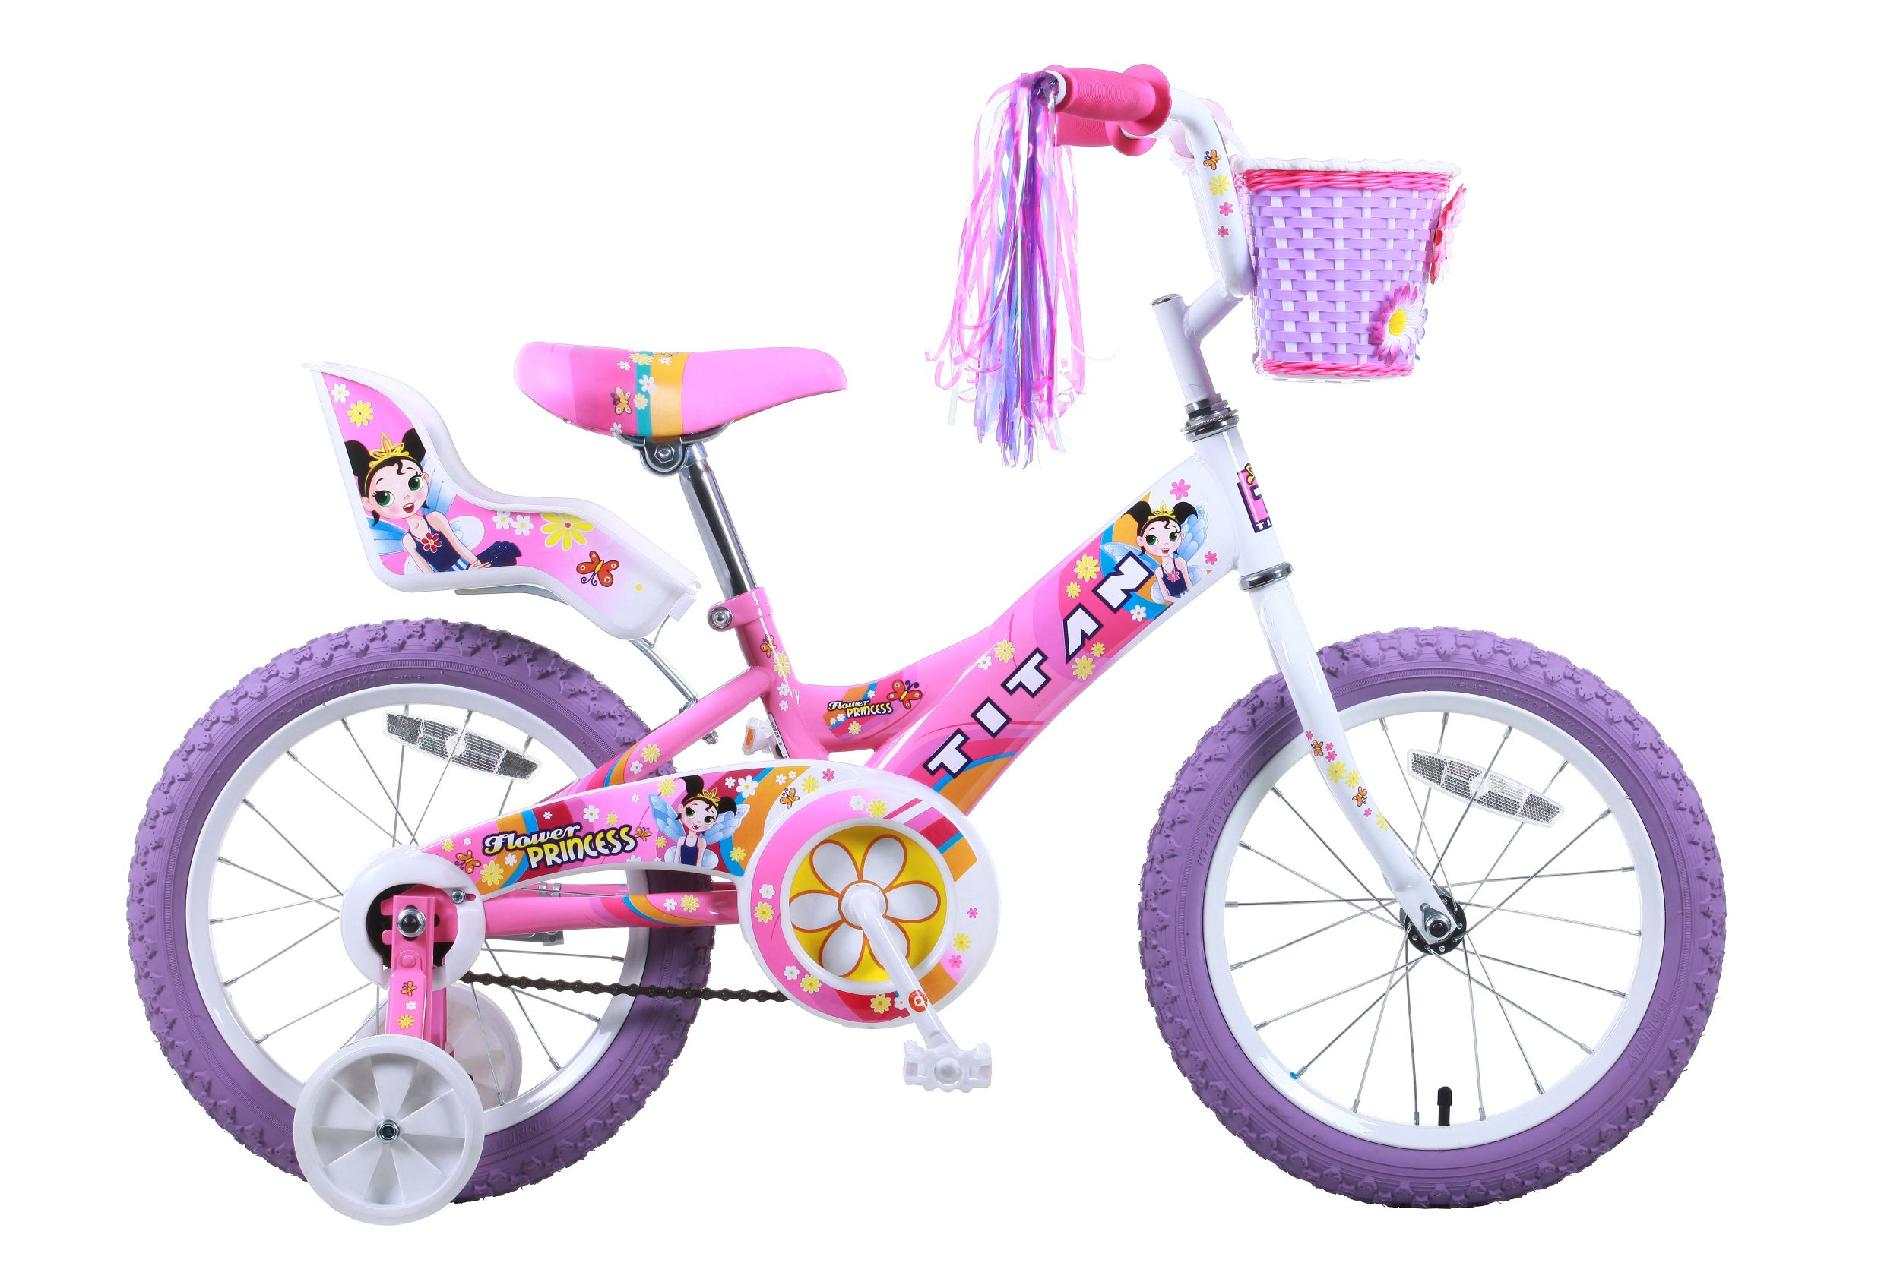 Titan Flower Princess 16-Inch BMX Bike with training wheels streamers doll seat and basket